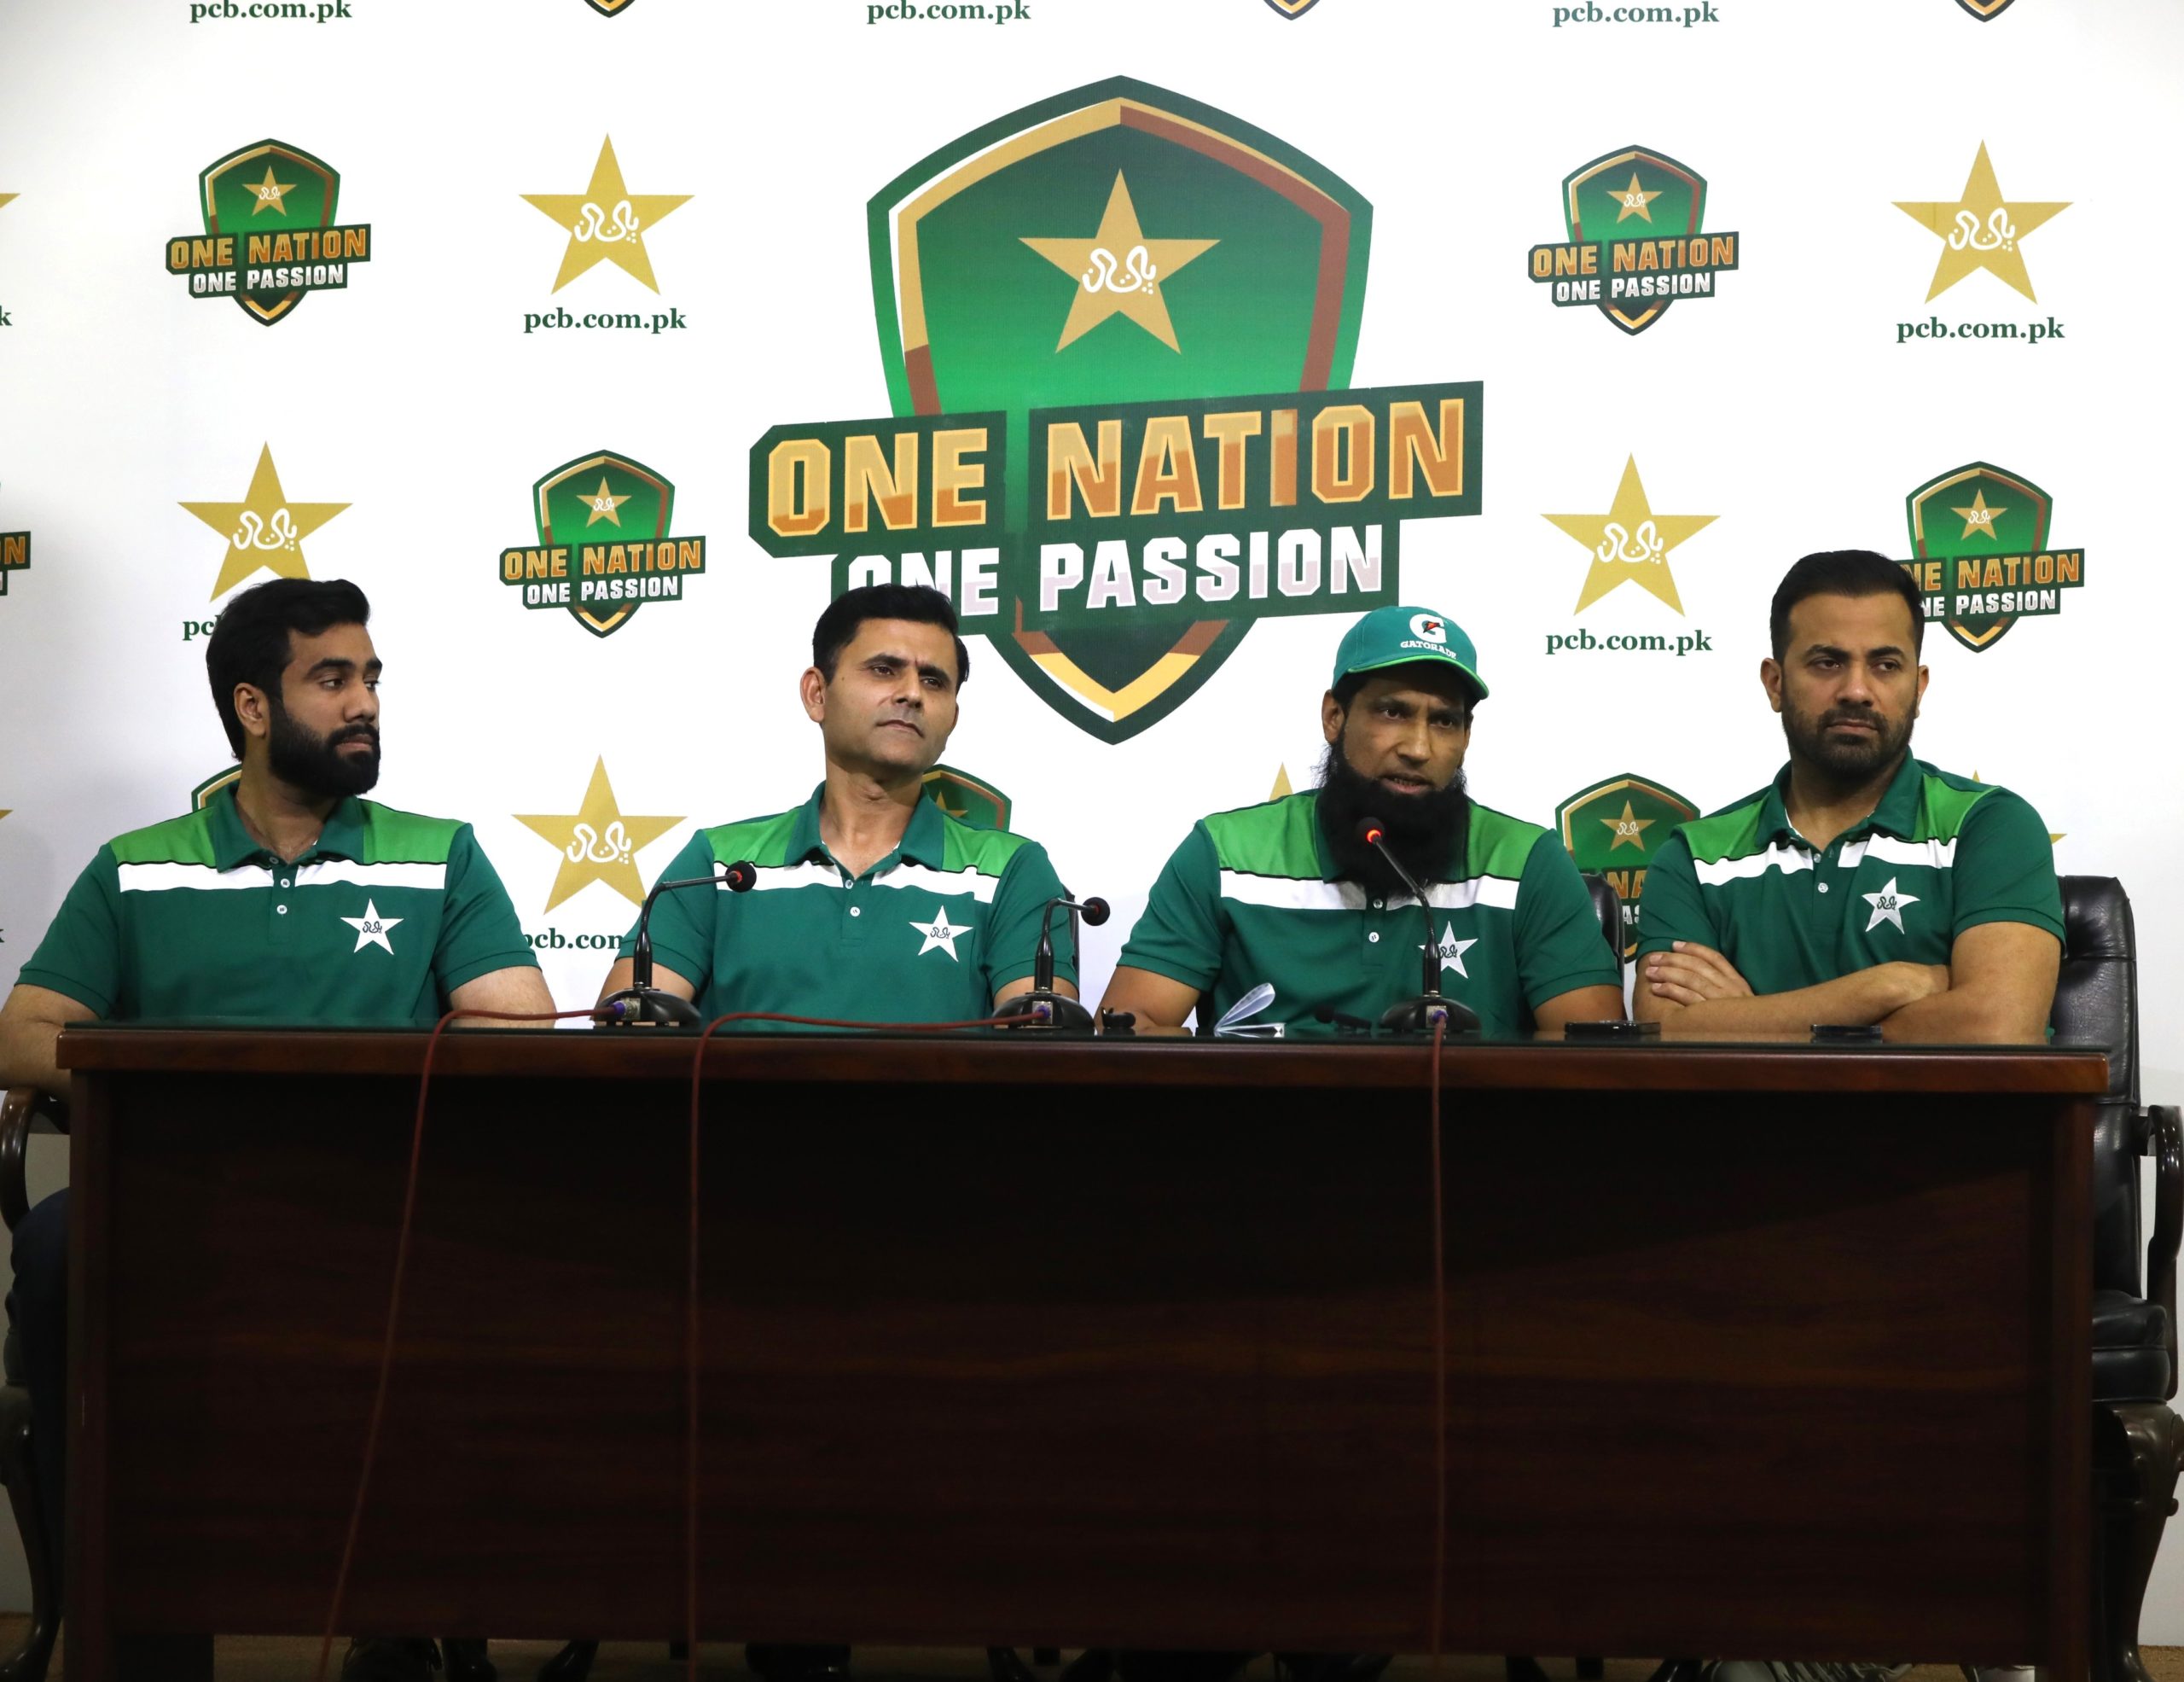 hasan-ali-haris-rauf-pakistan-squad-ireland-england-tour